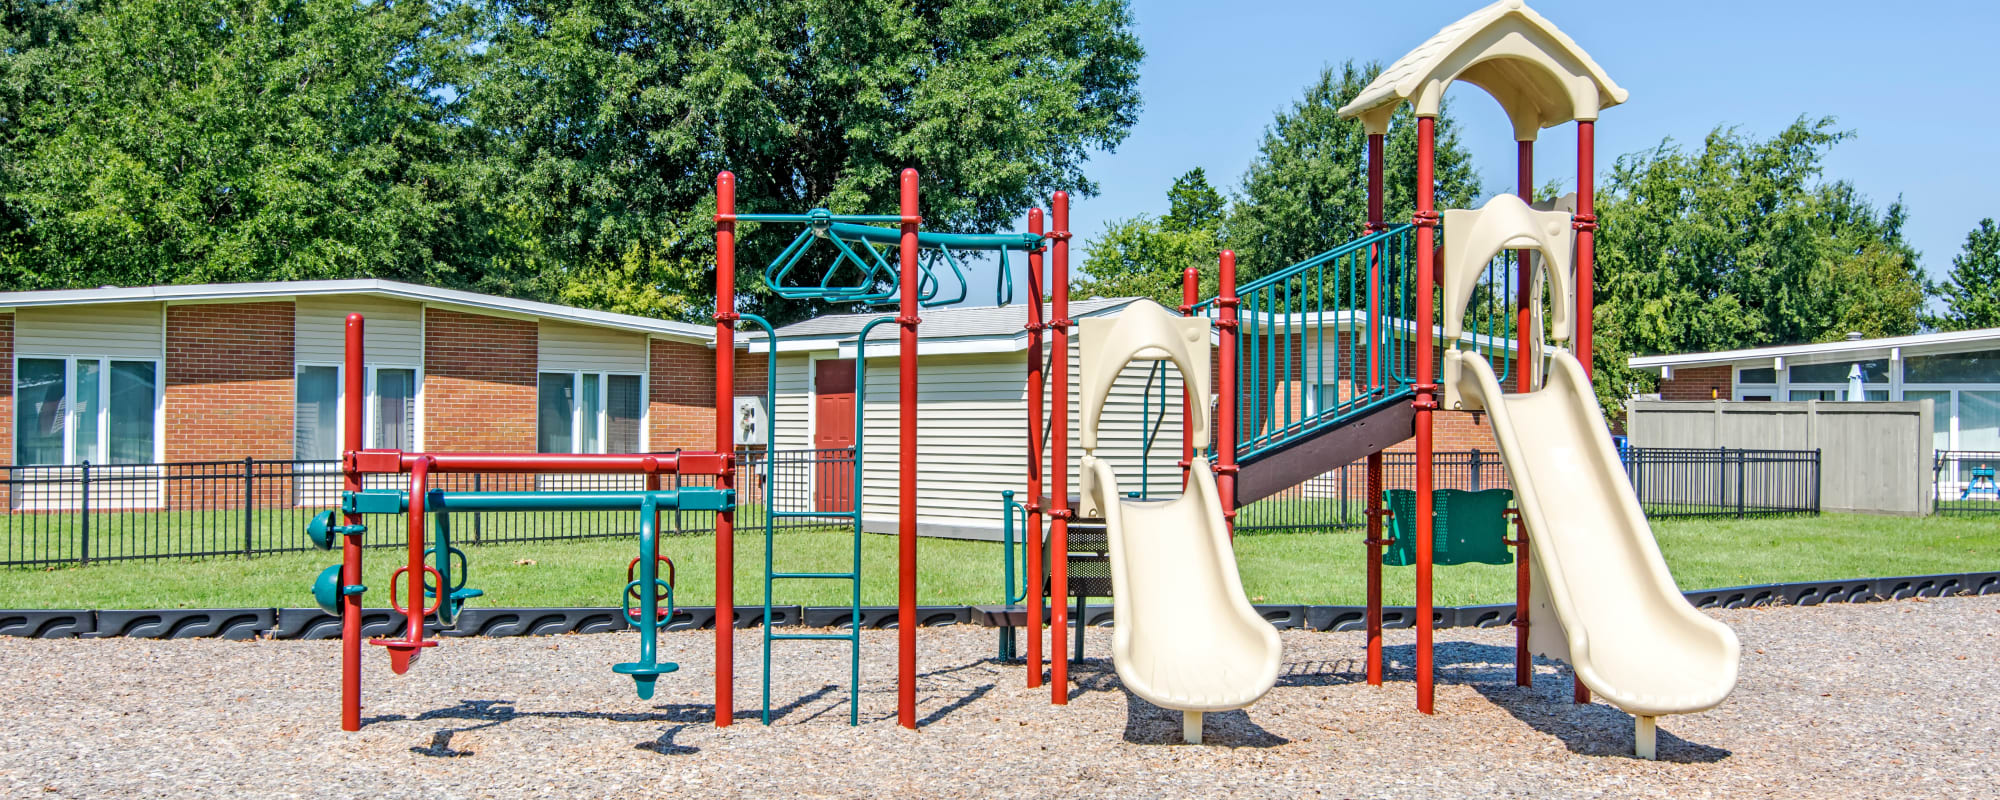 the playground at Queens Way in Norfolk, Virginia